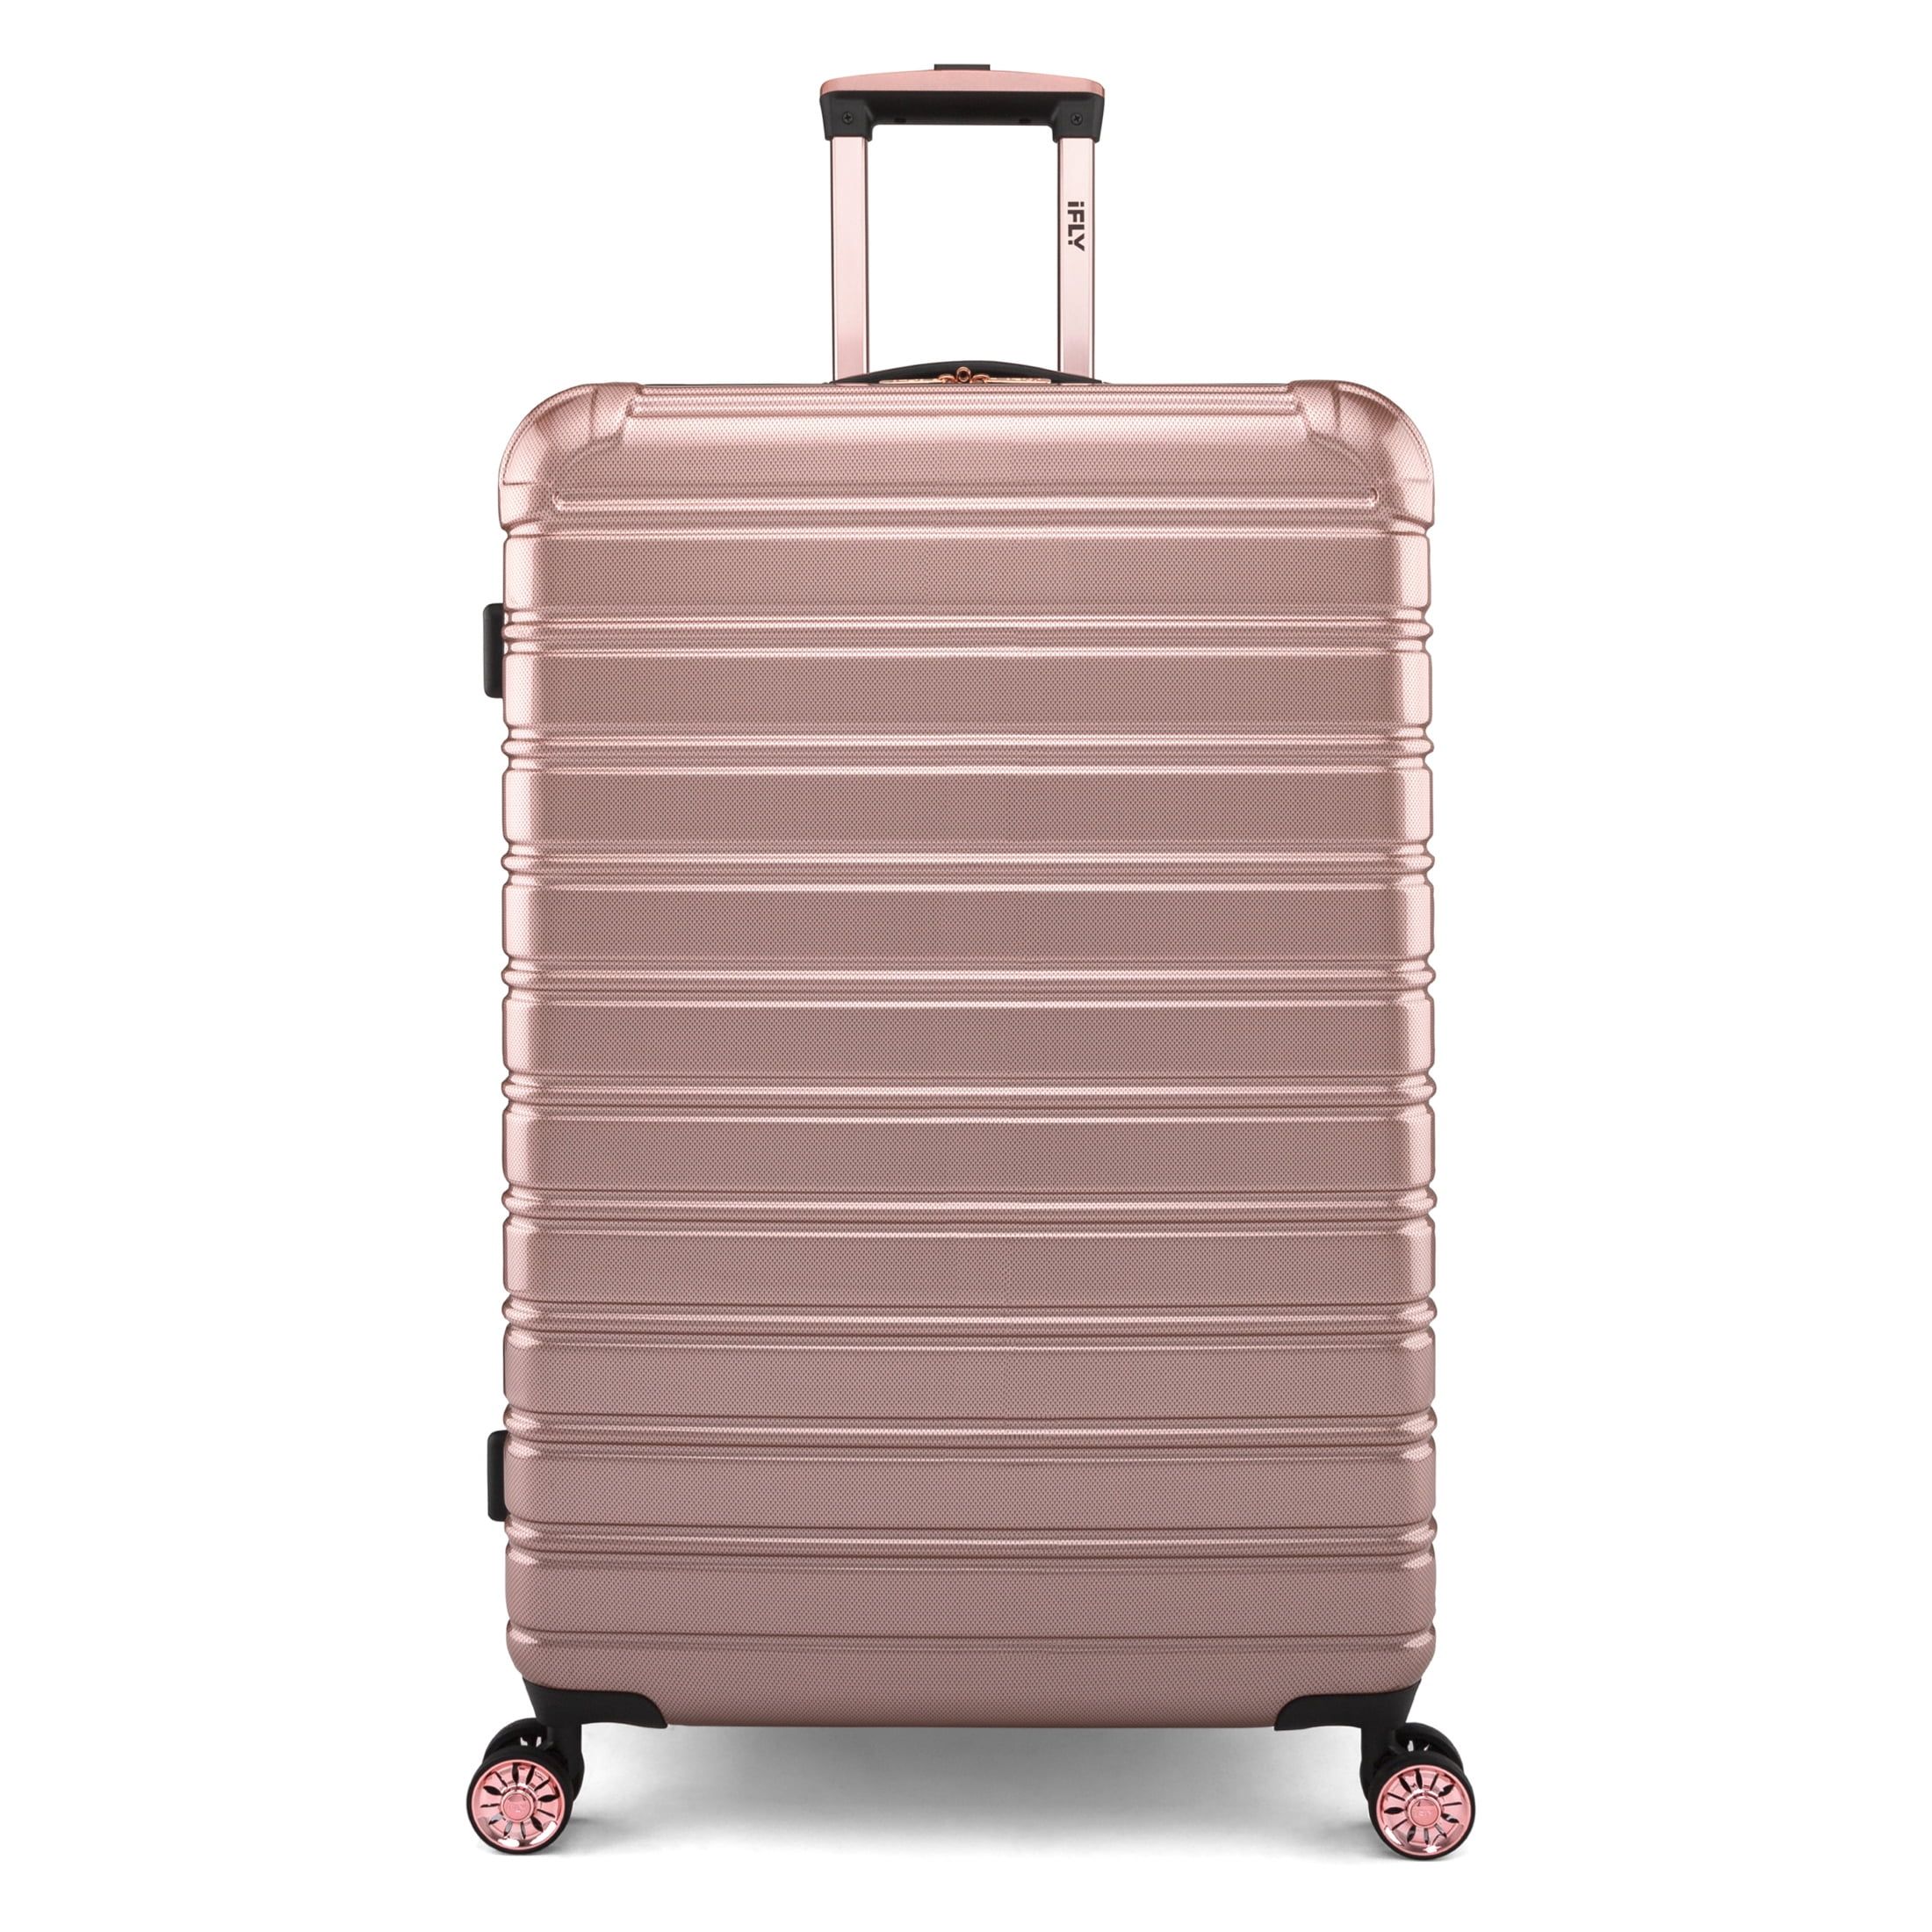 iFLY Hardside Fibertech 28" Checked Luggage, Rose Gold Luggage | Walmart (US)